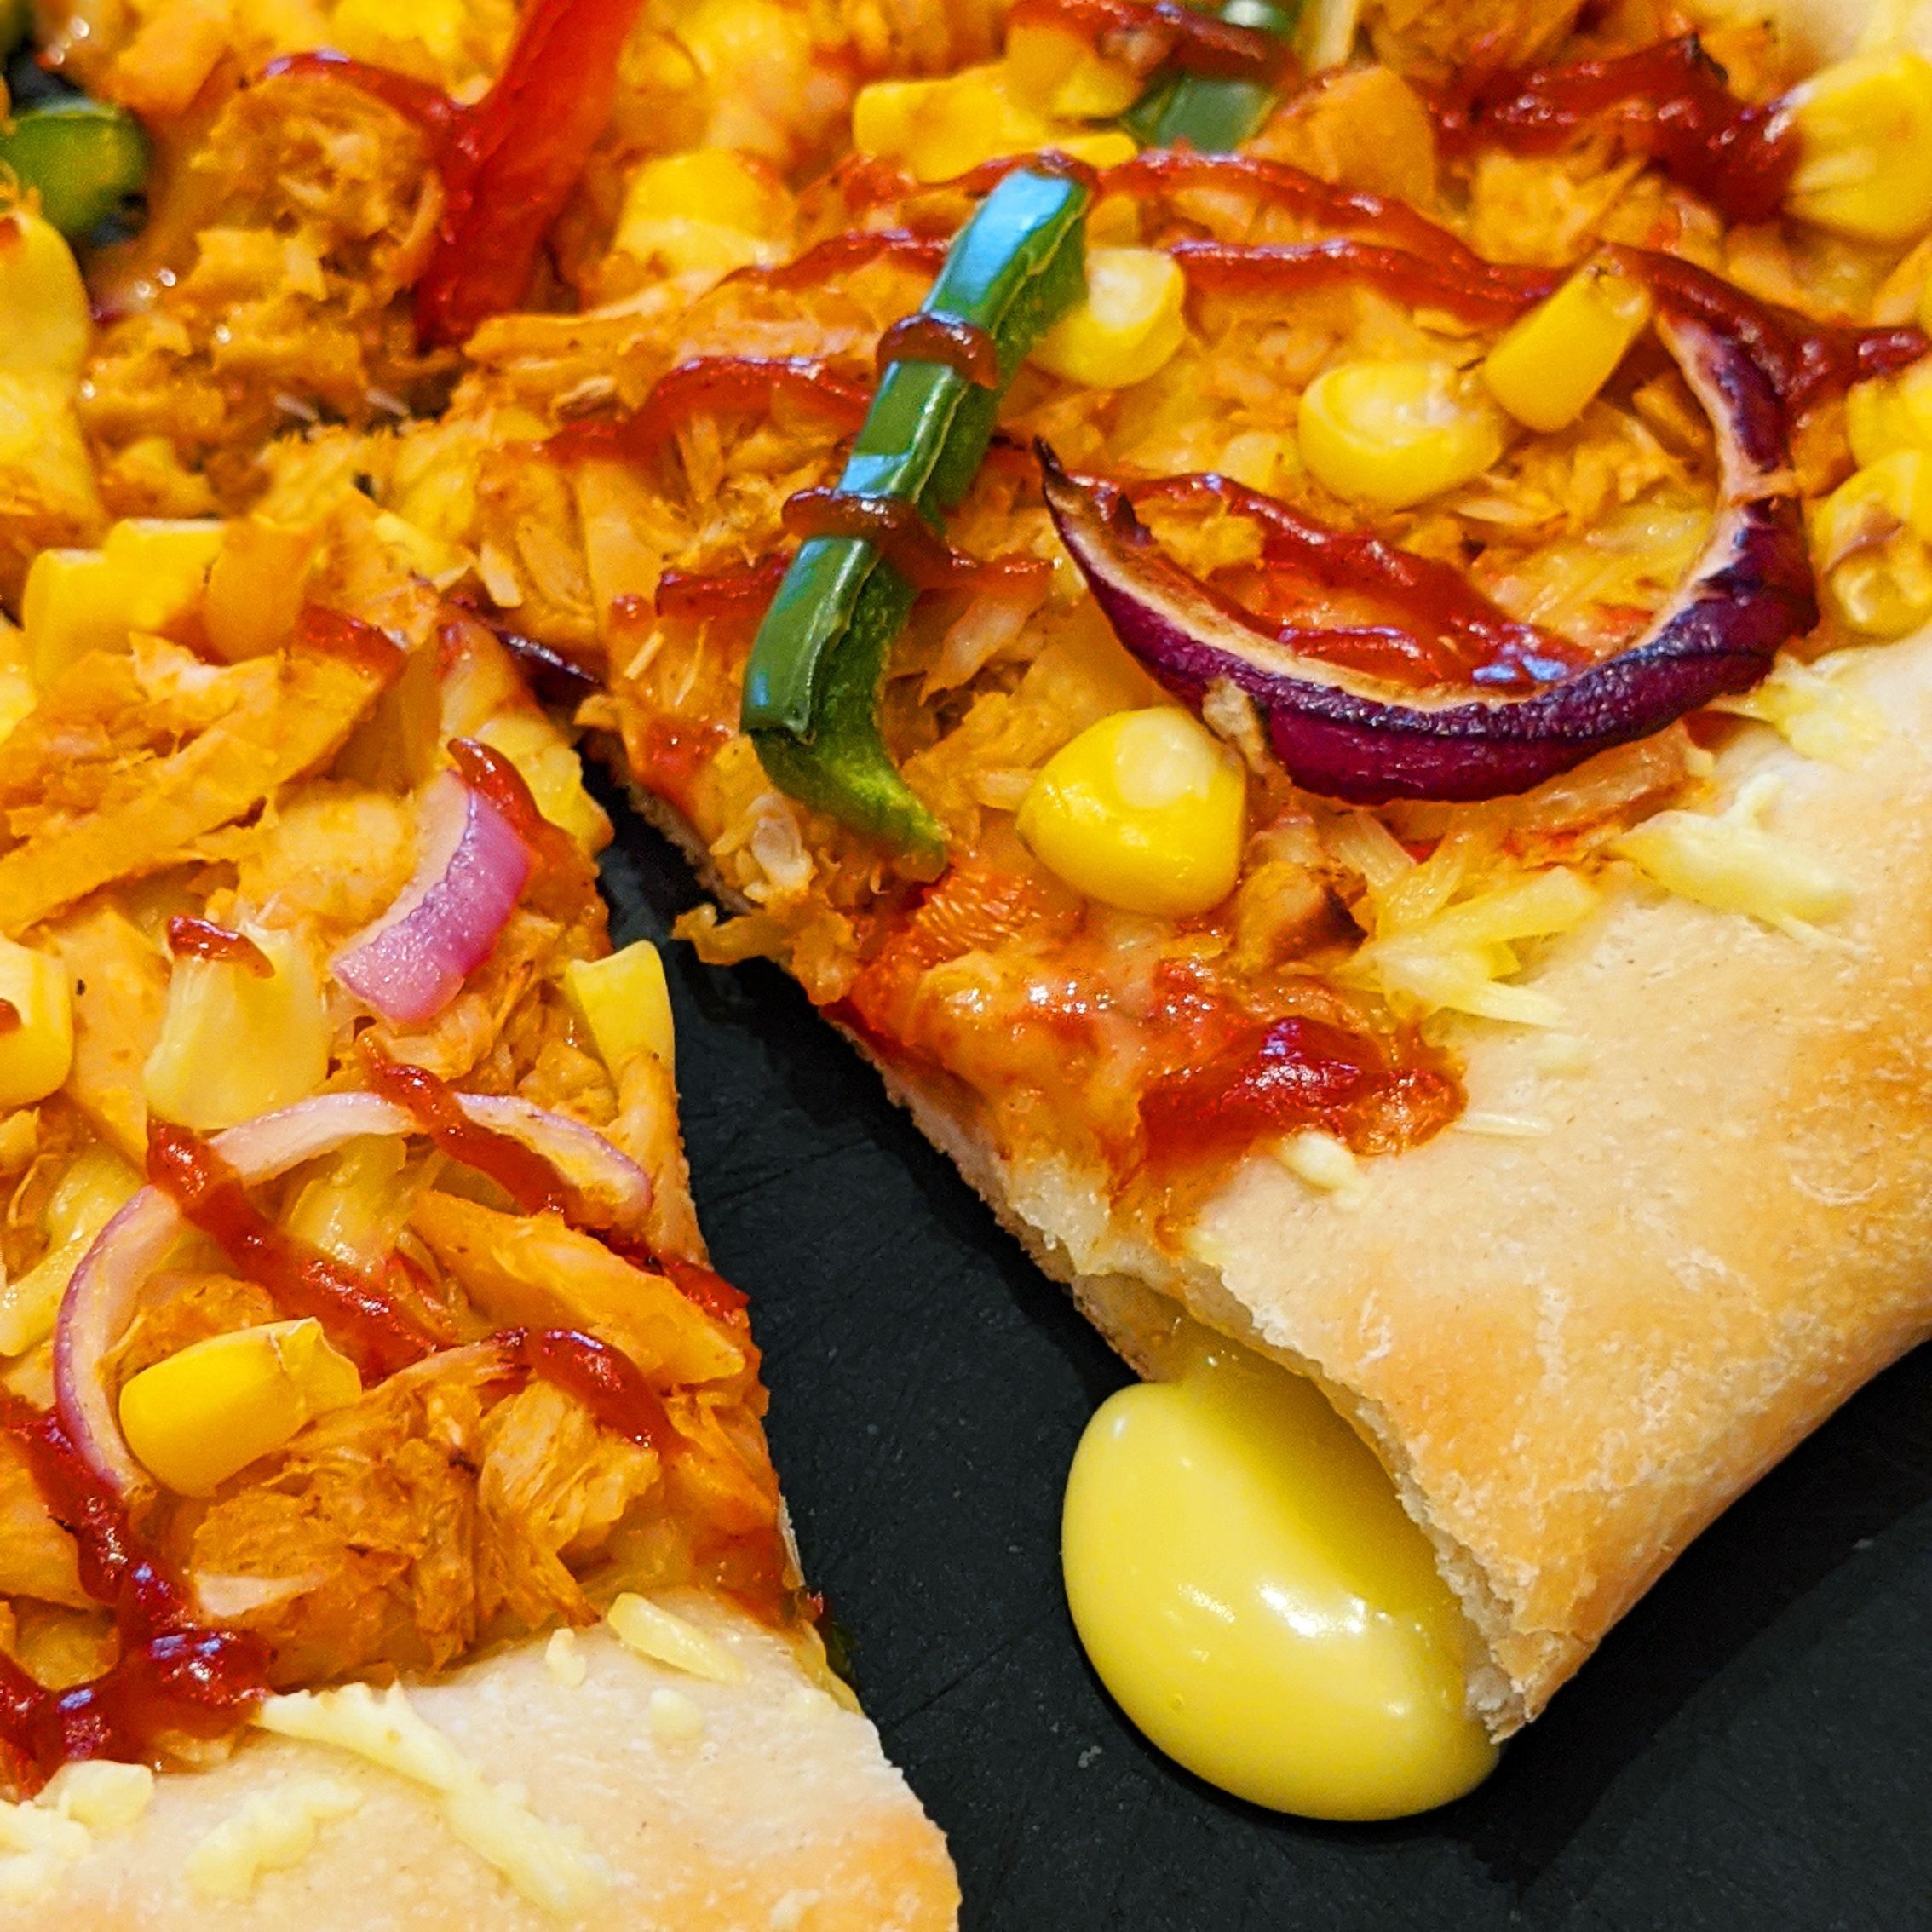 Pizza crust has who stuffed FAQ: What